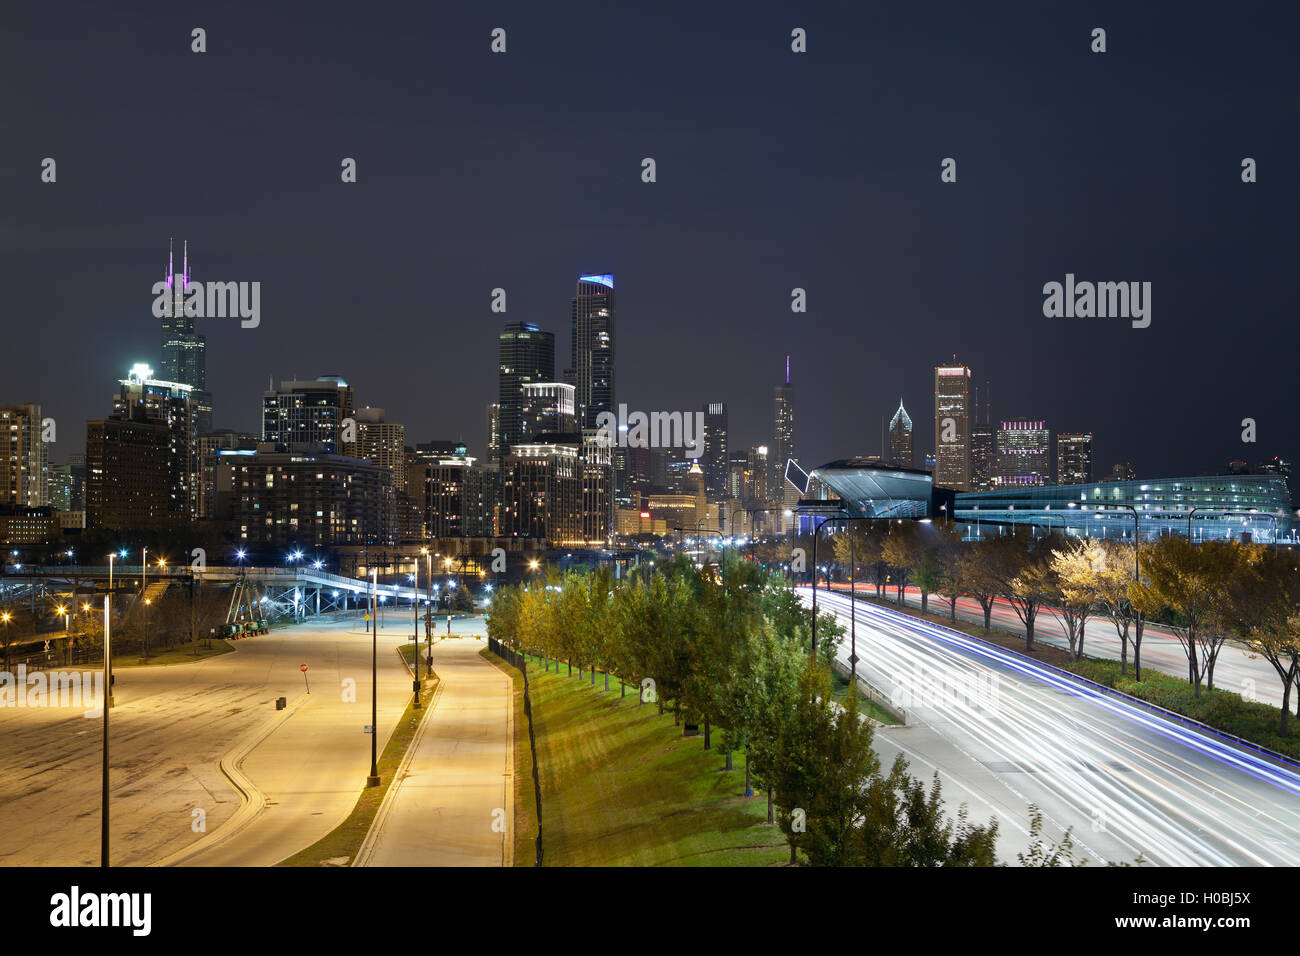 Image of Chicago skyline at night Stock Photo